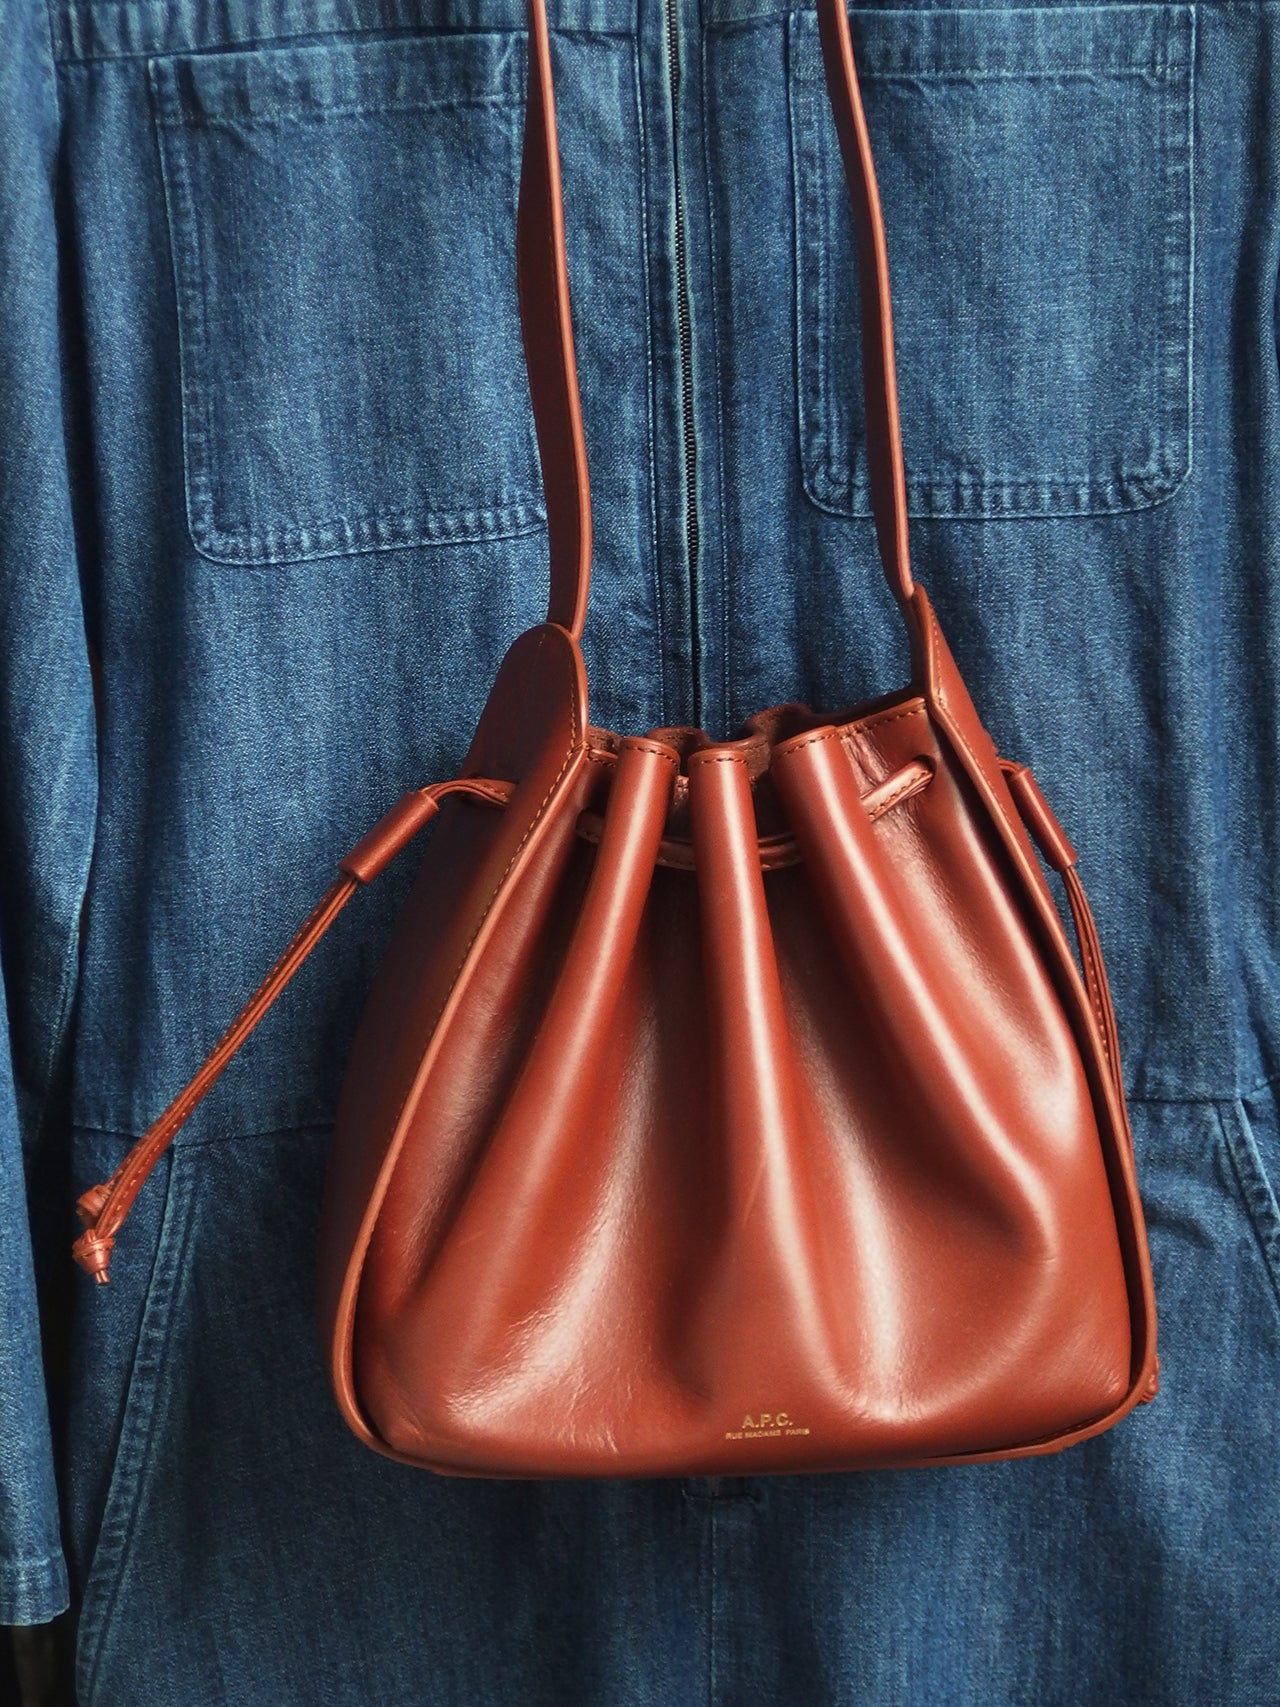 hakuyaのバッグ美品 アーペーセー 巾着 ショルダーバッグ レザー ターコイズ ハンドバッグ